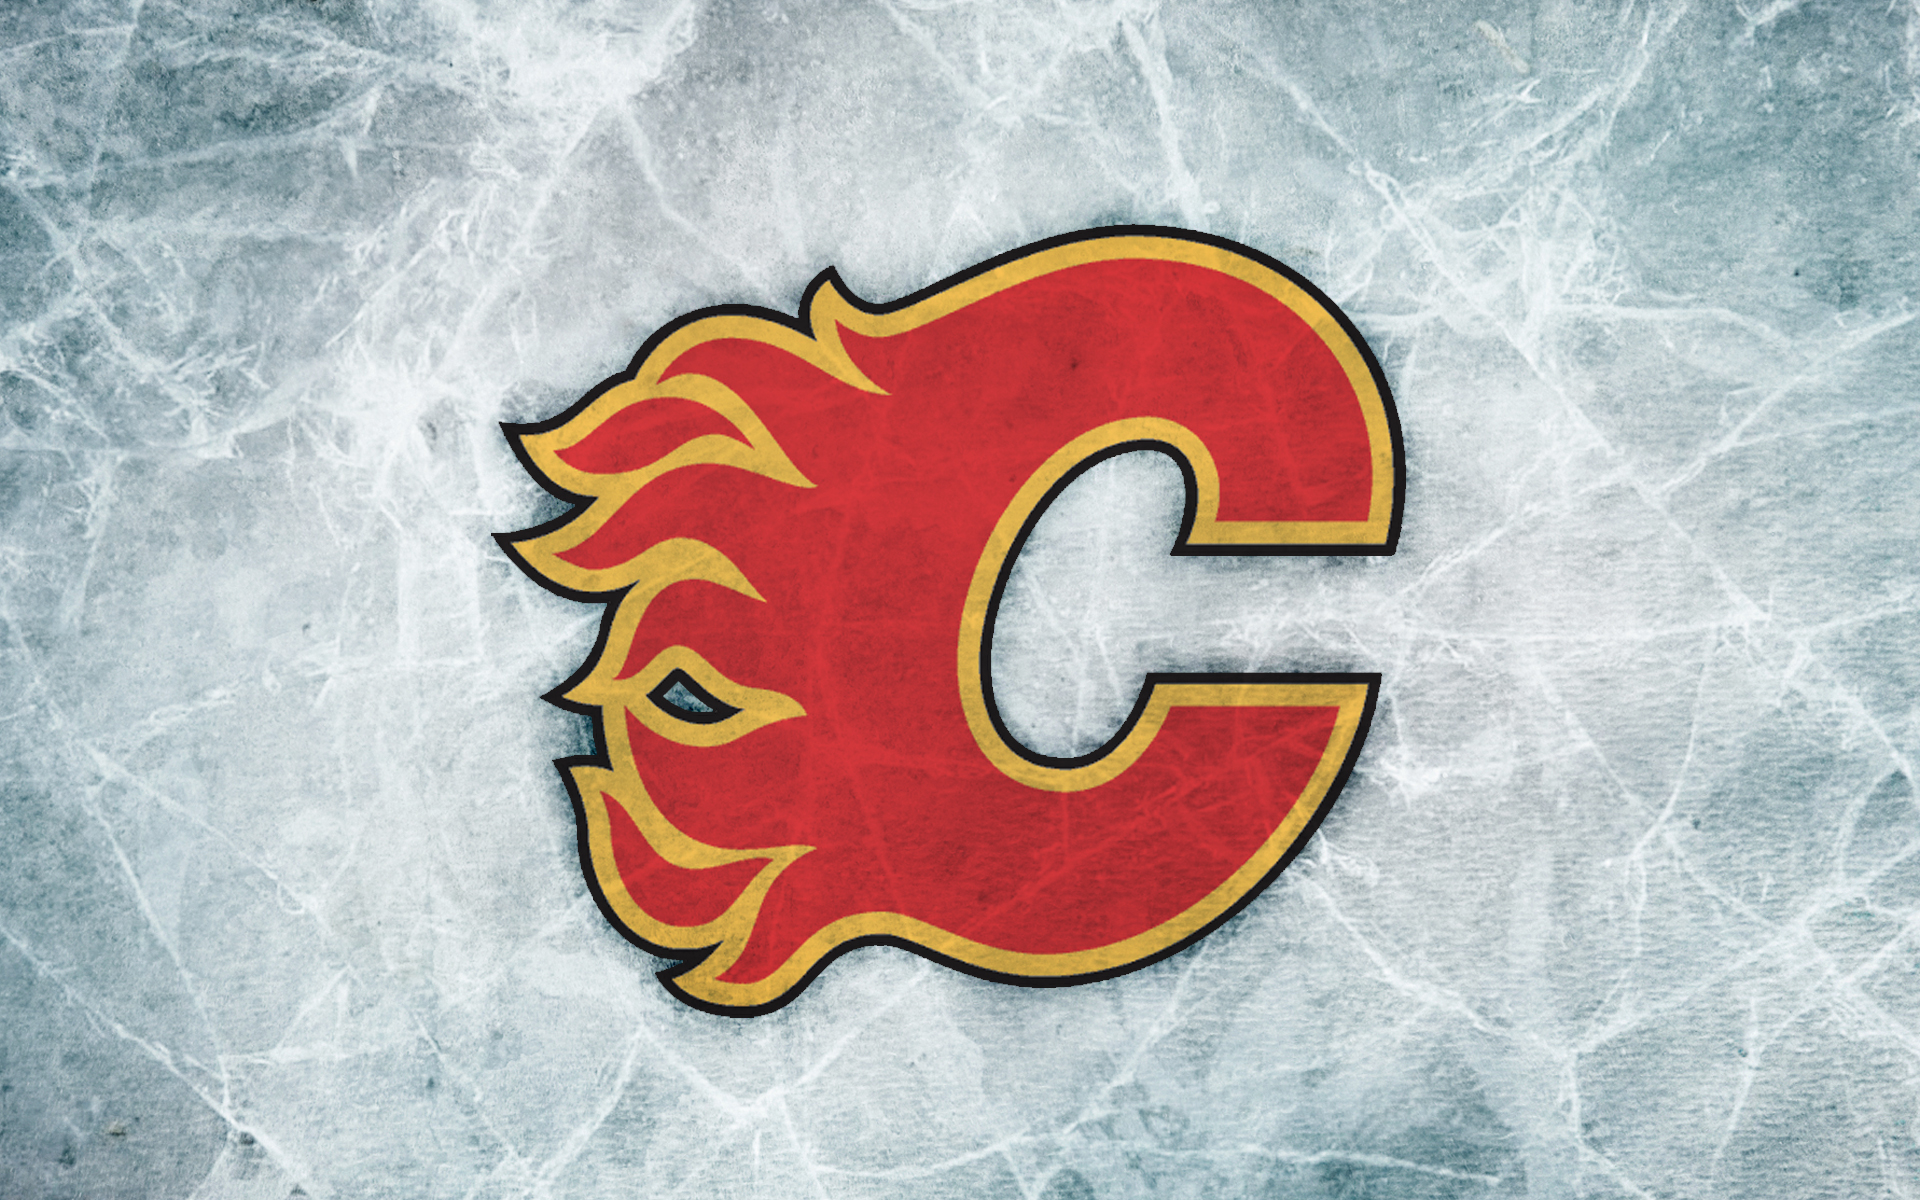 Calgary Flames Wallpaper Free Download